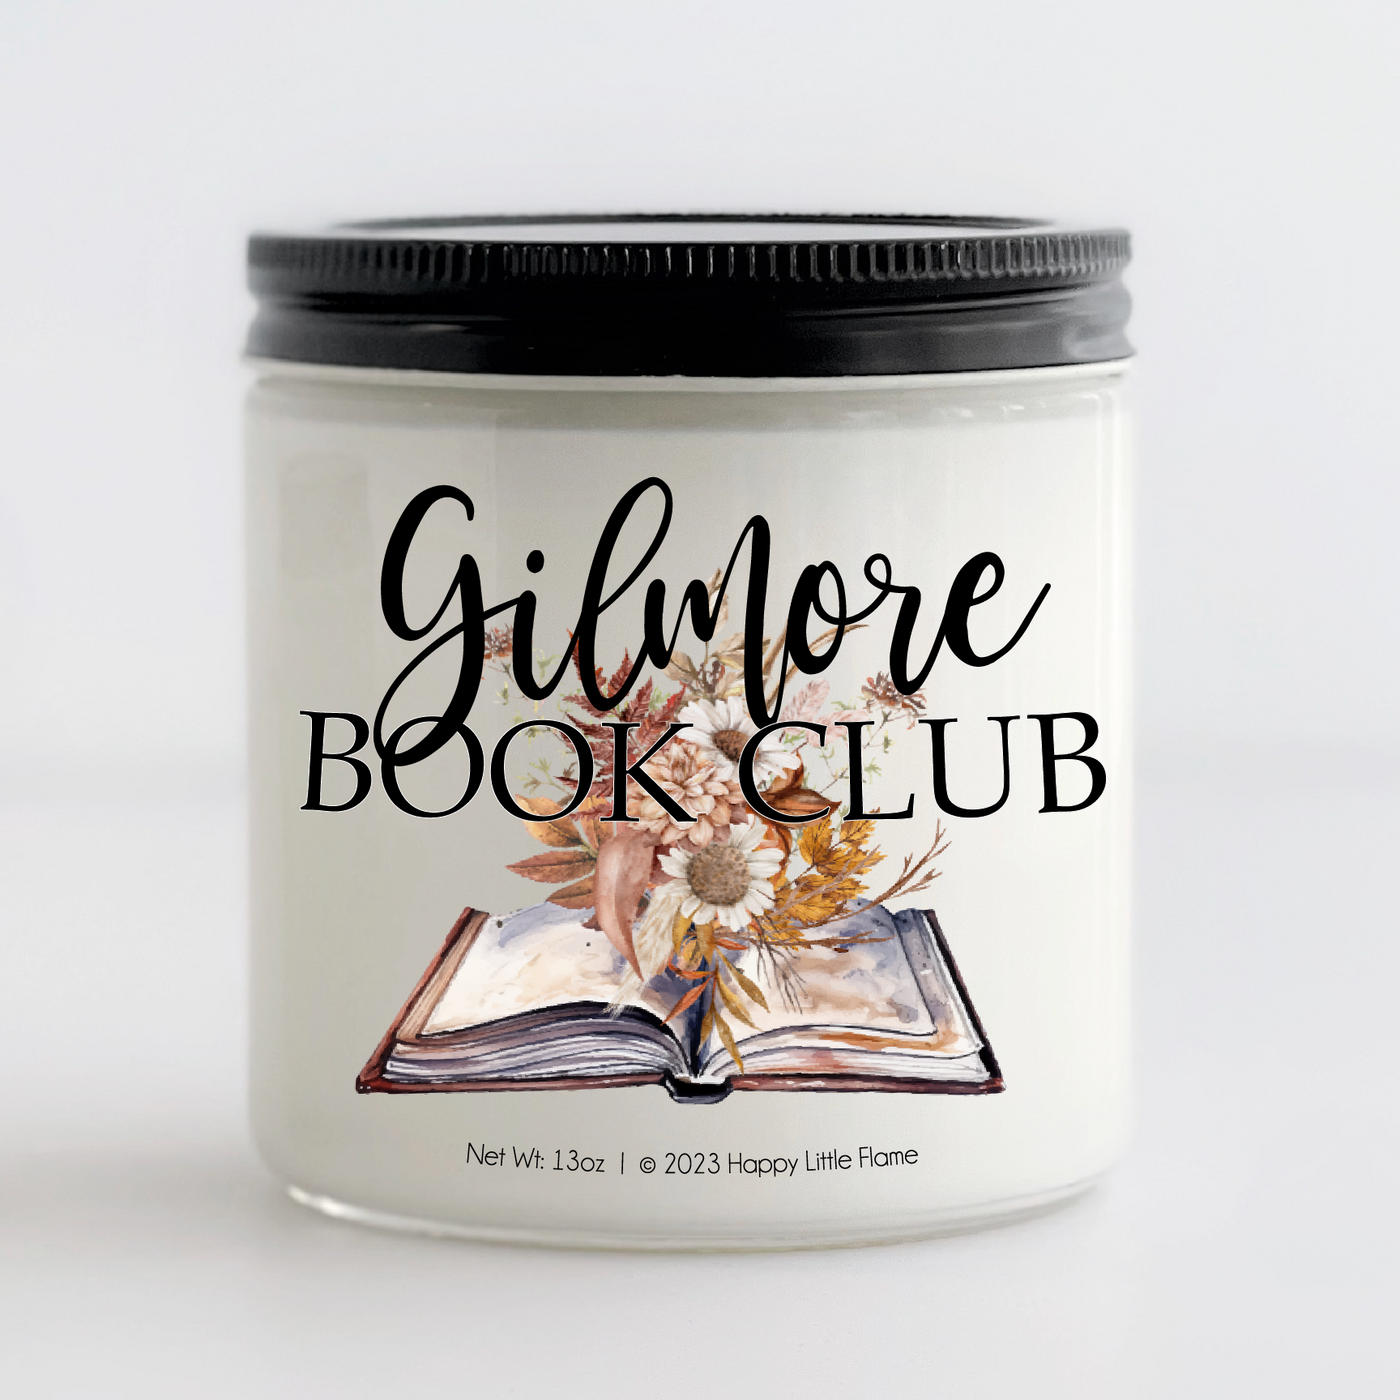 Gilmore Book Club